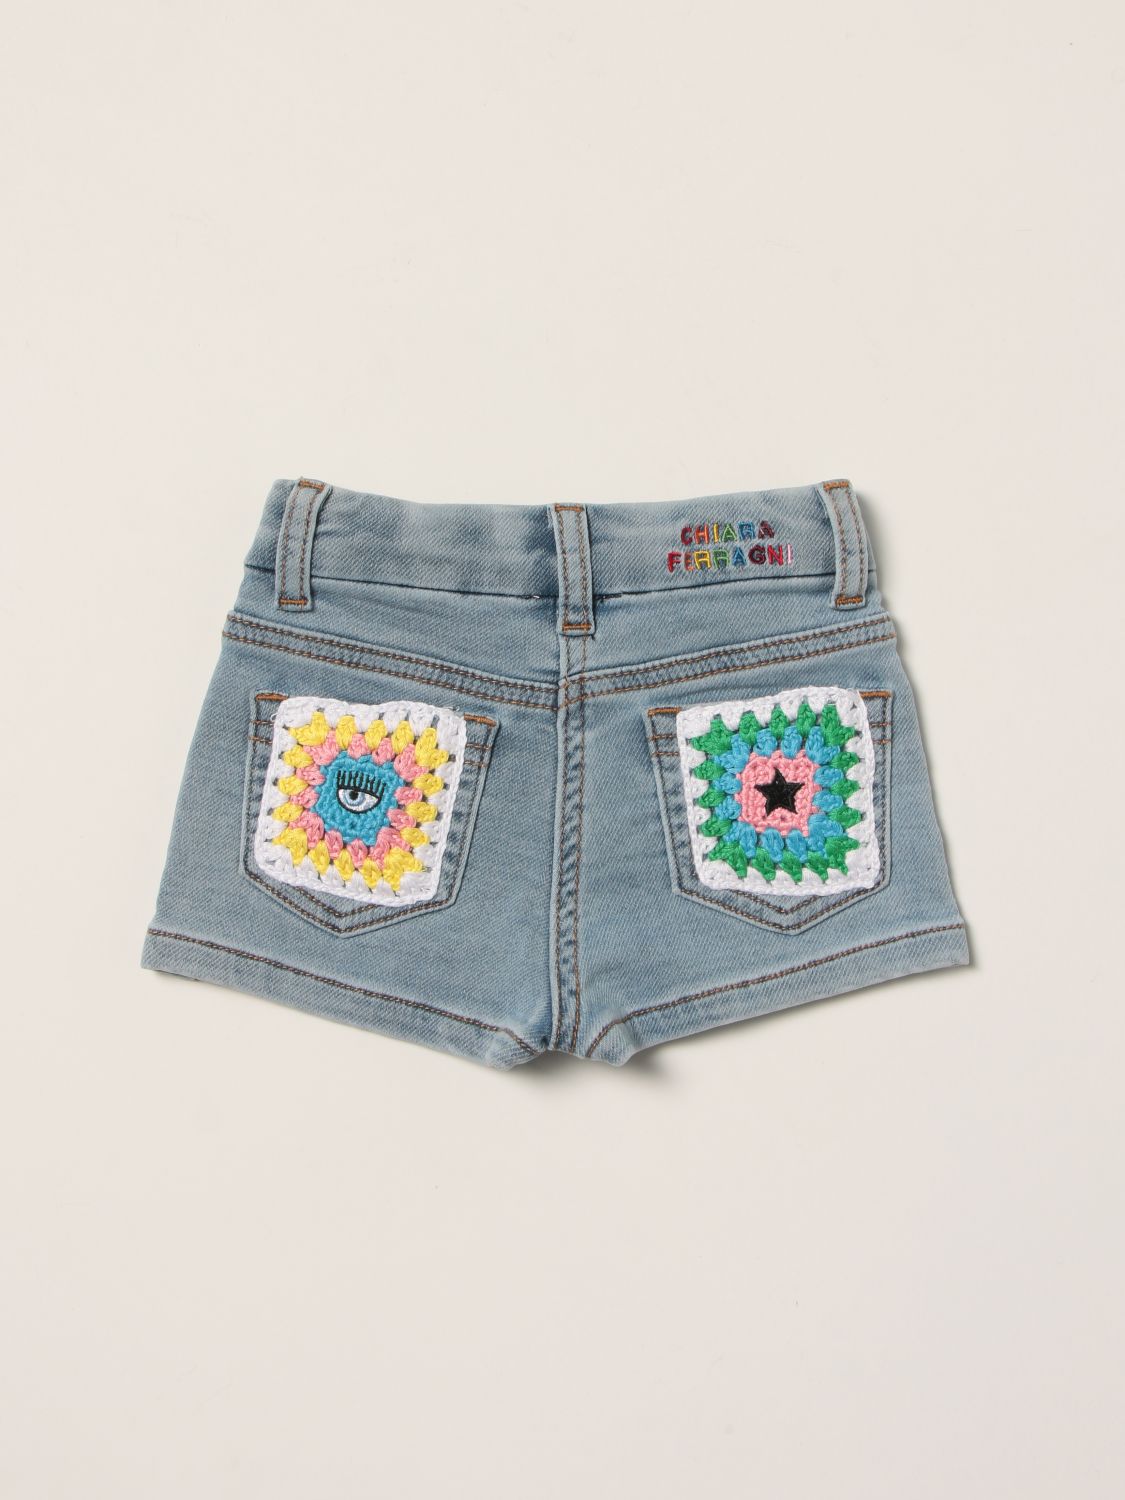 Chiara Ferragni denim shorts with crochet pockets